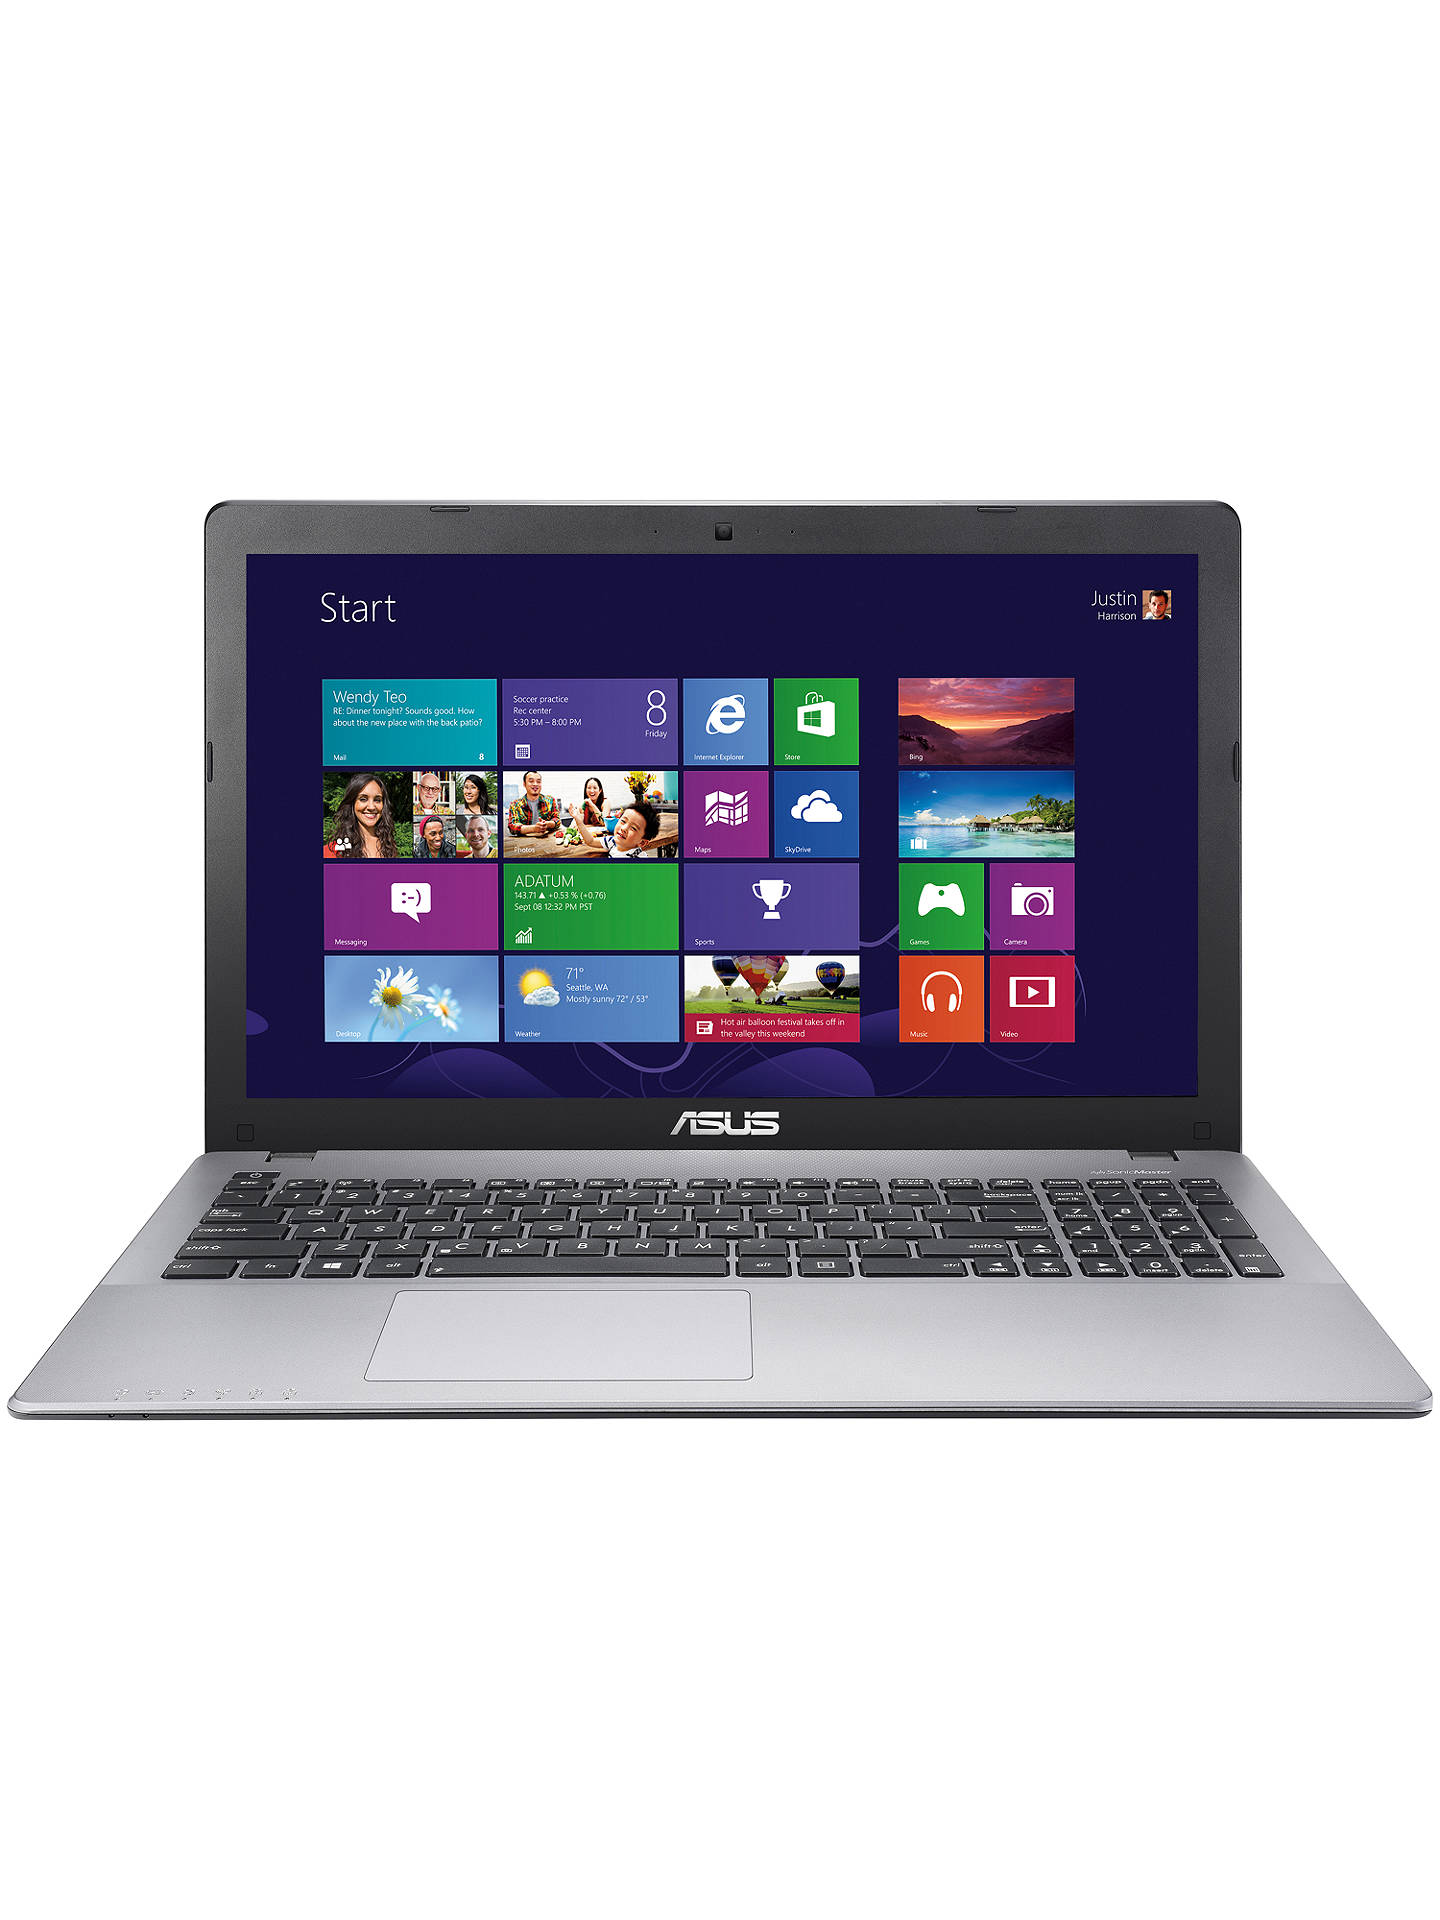 ASUS X550CA Laptop, Intel Core i5, 6GB RAM, 1TB, 15.6", Grey at John Lewis & Partners